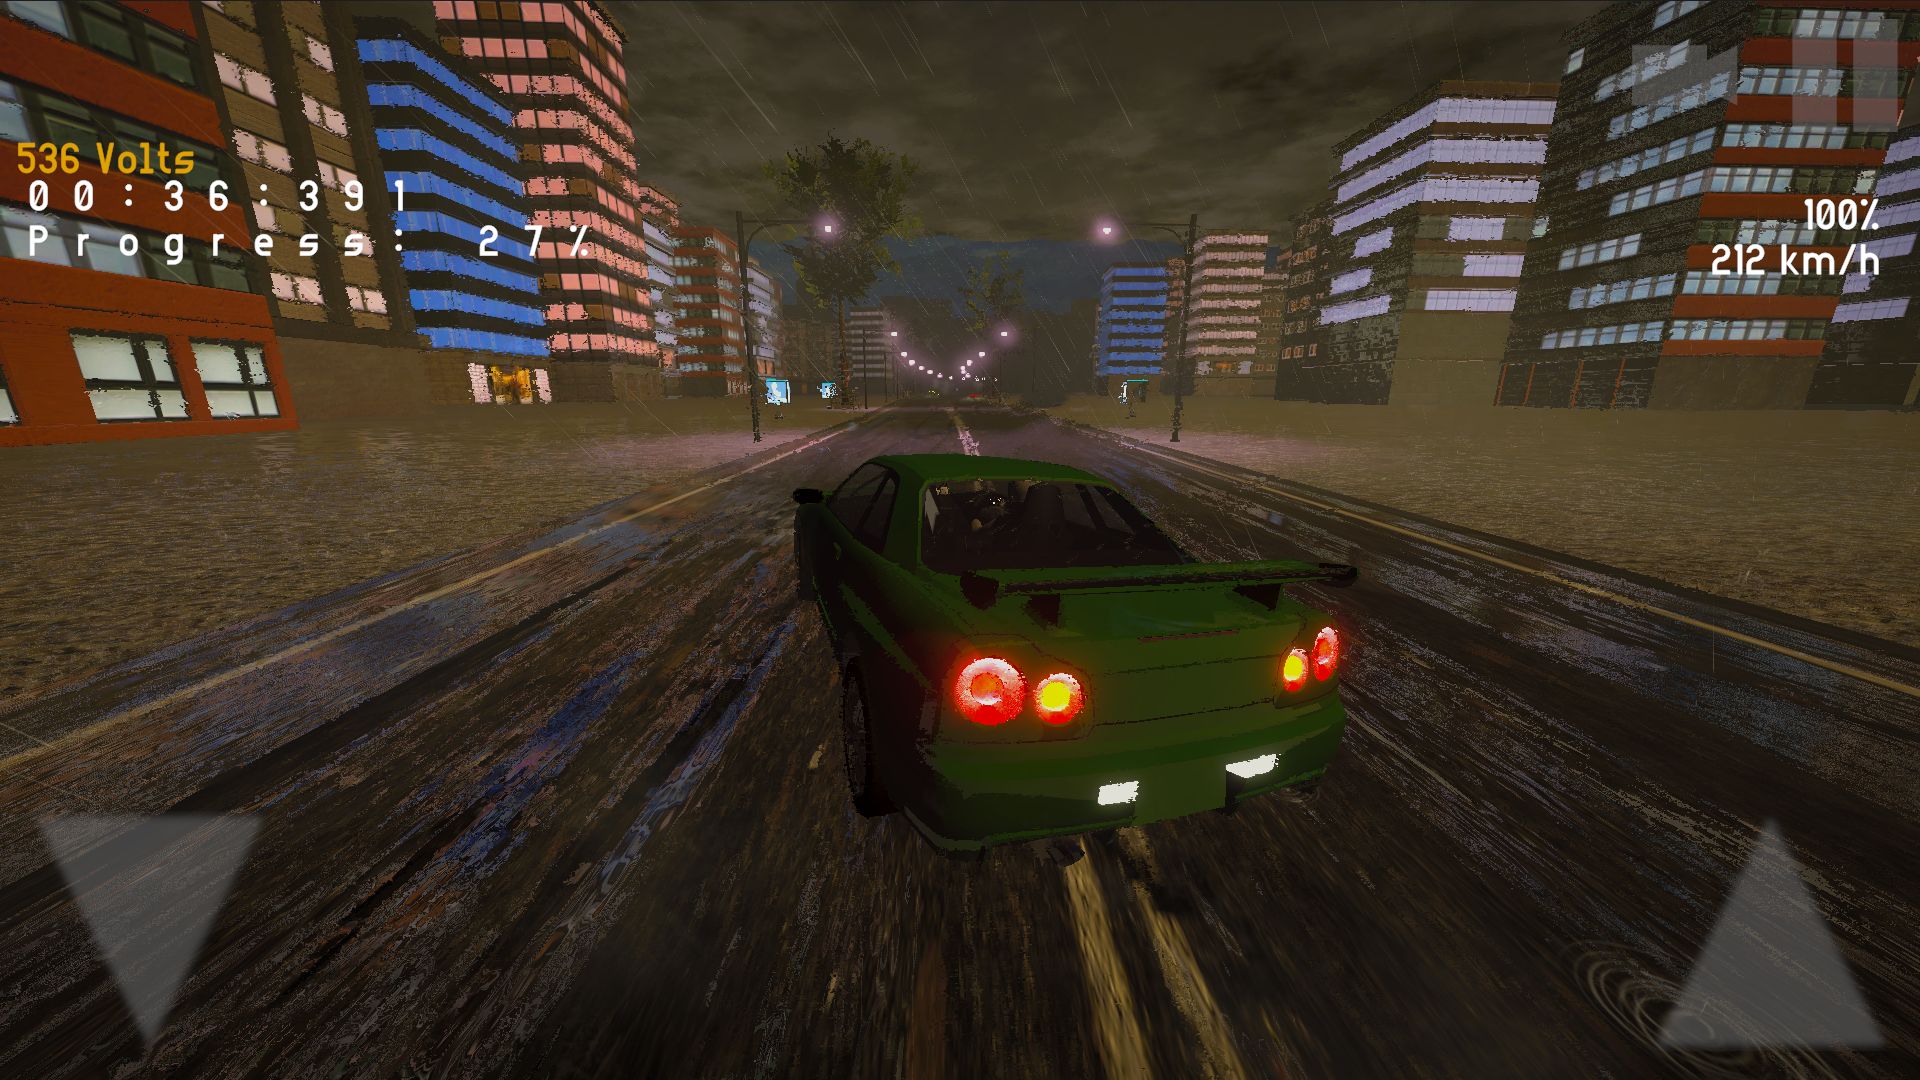 Getaway Storm - Android game screenshots.